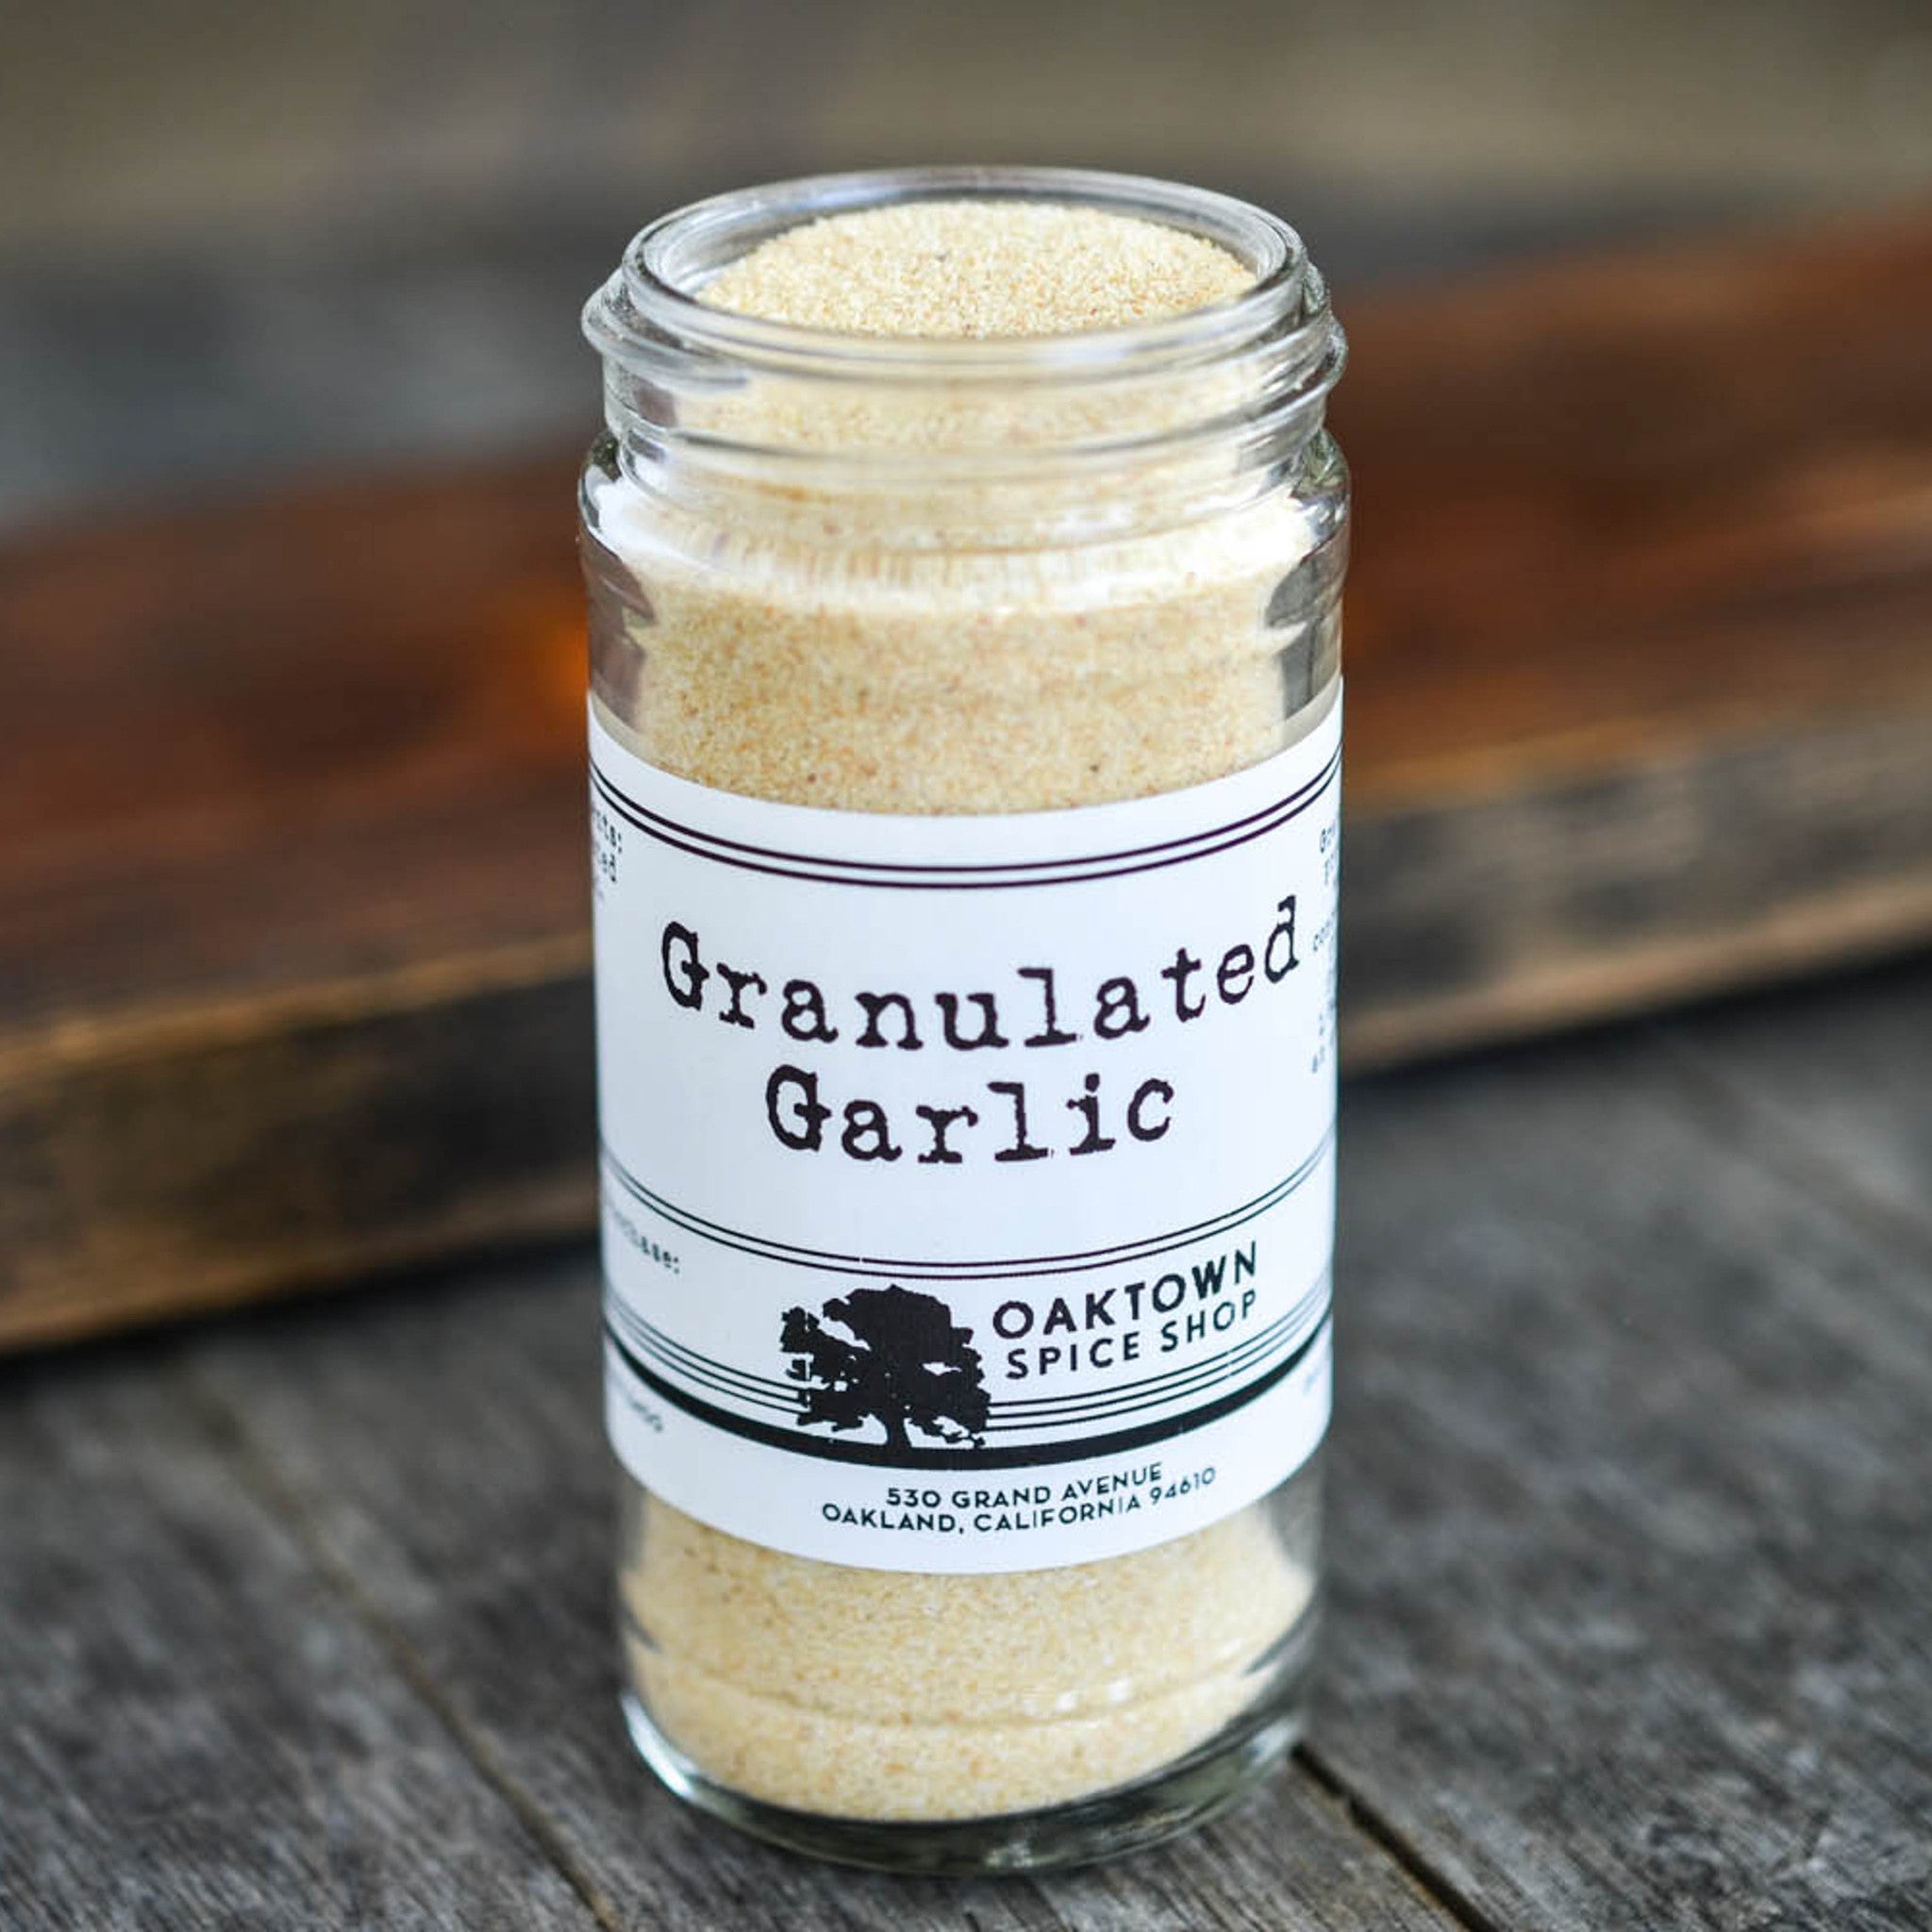 Granulated Garlic from Oaktown Spice Shop